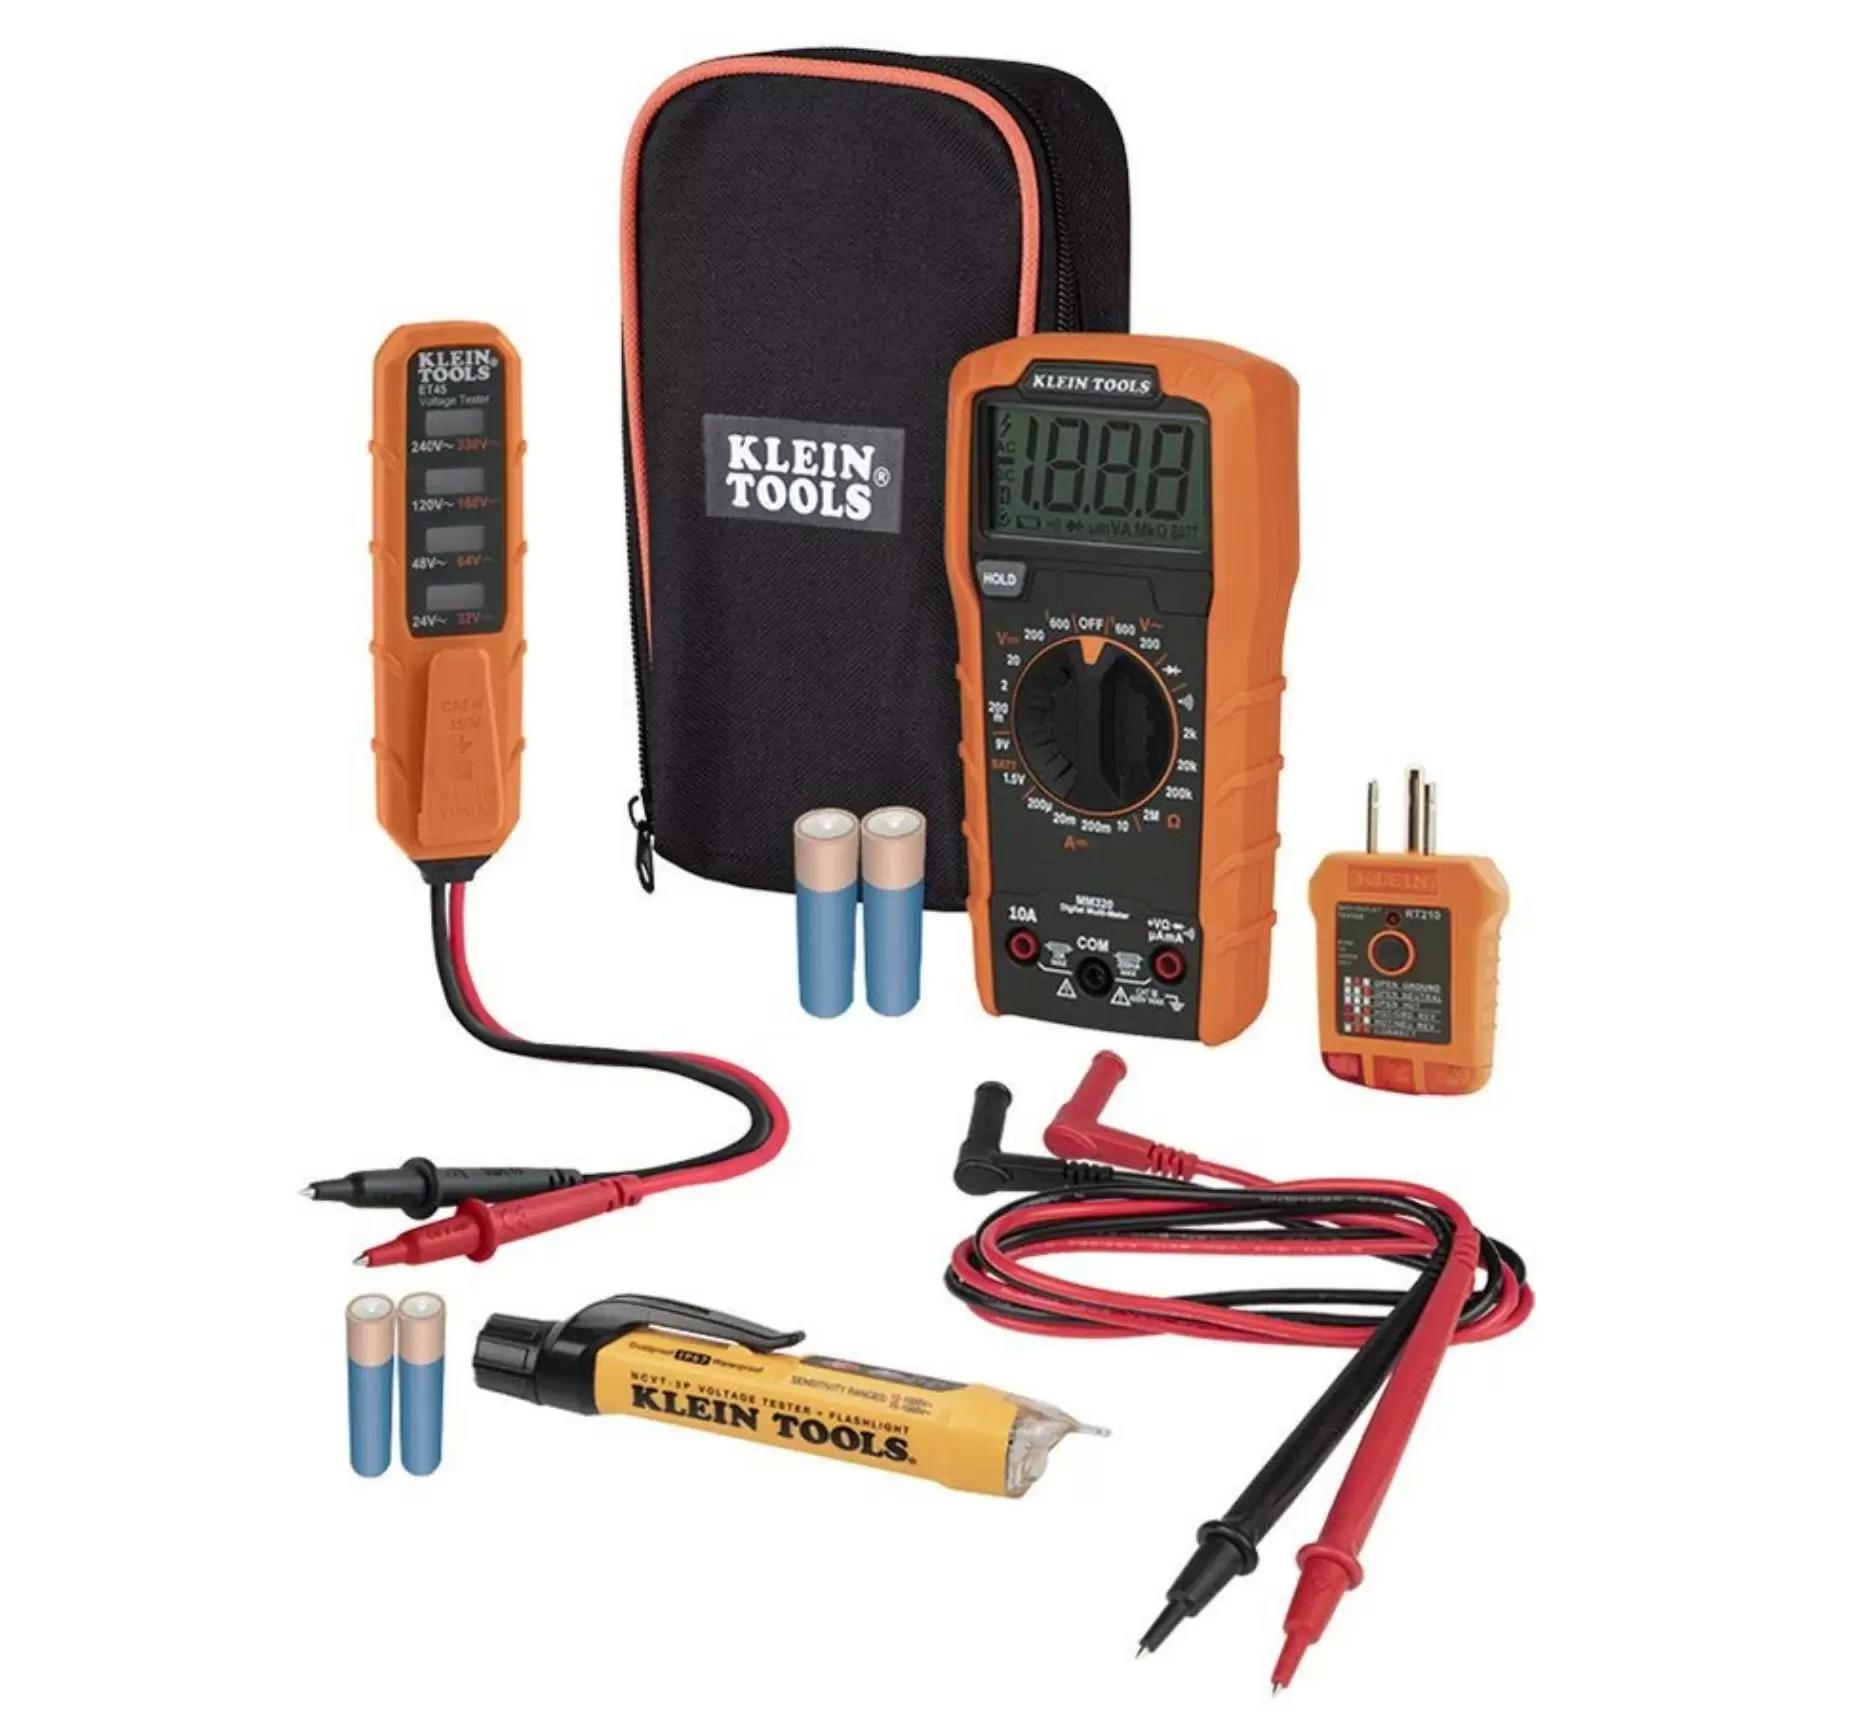 Klein Digital Multimeter Electrical Tester Set for $45.51 Shipped